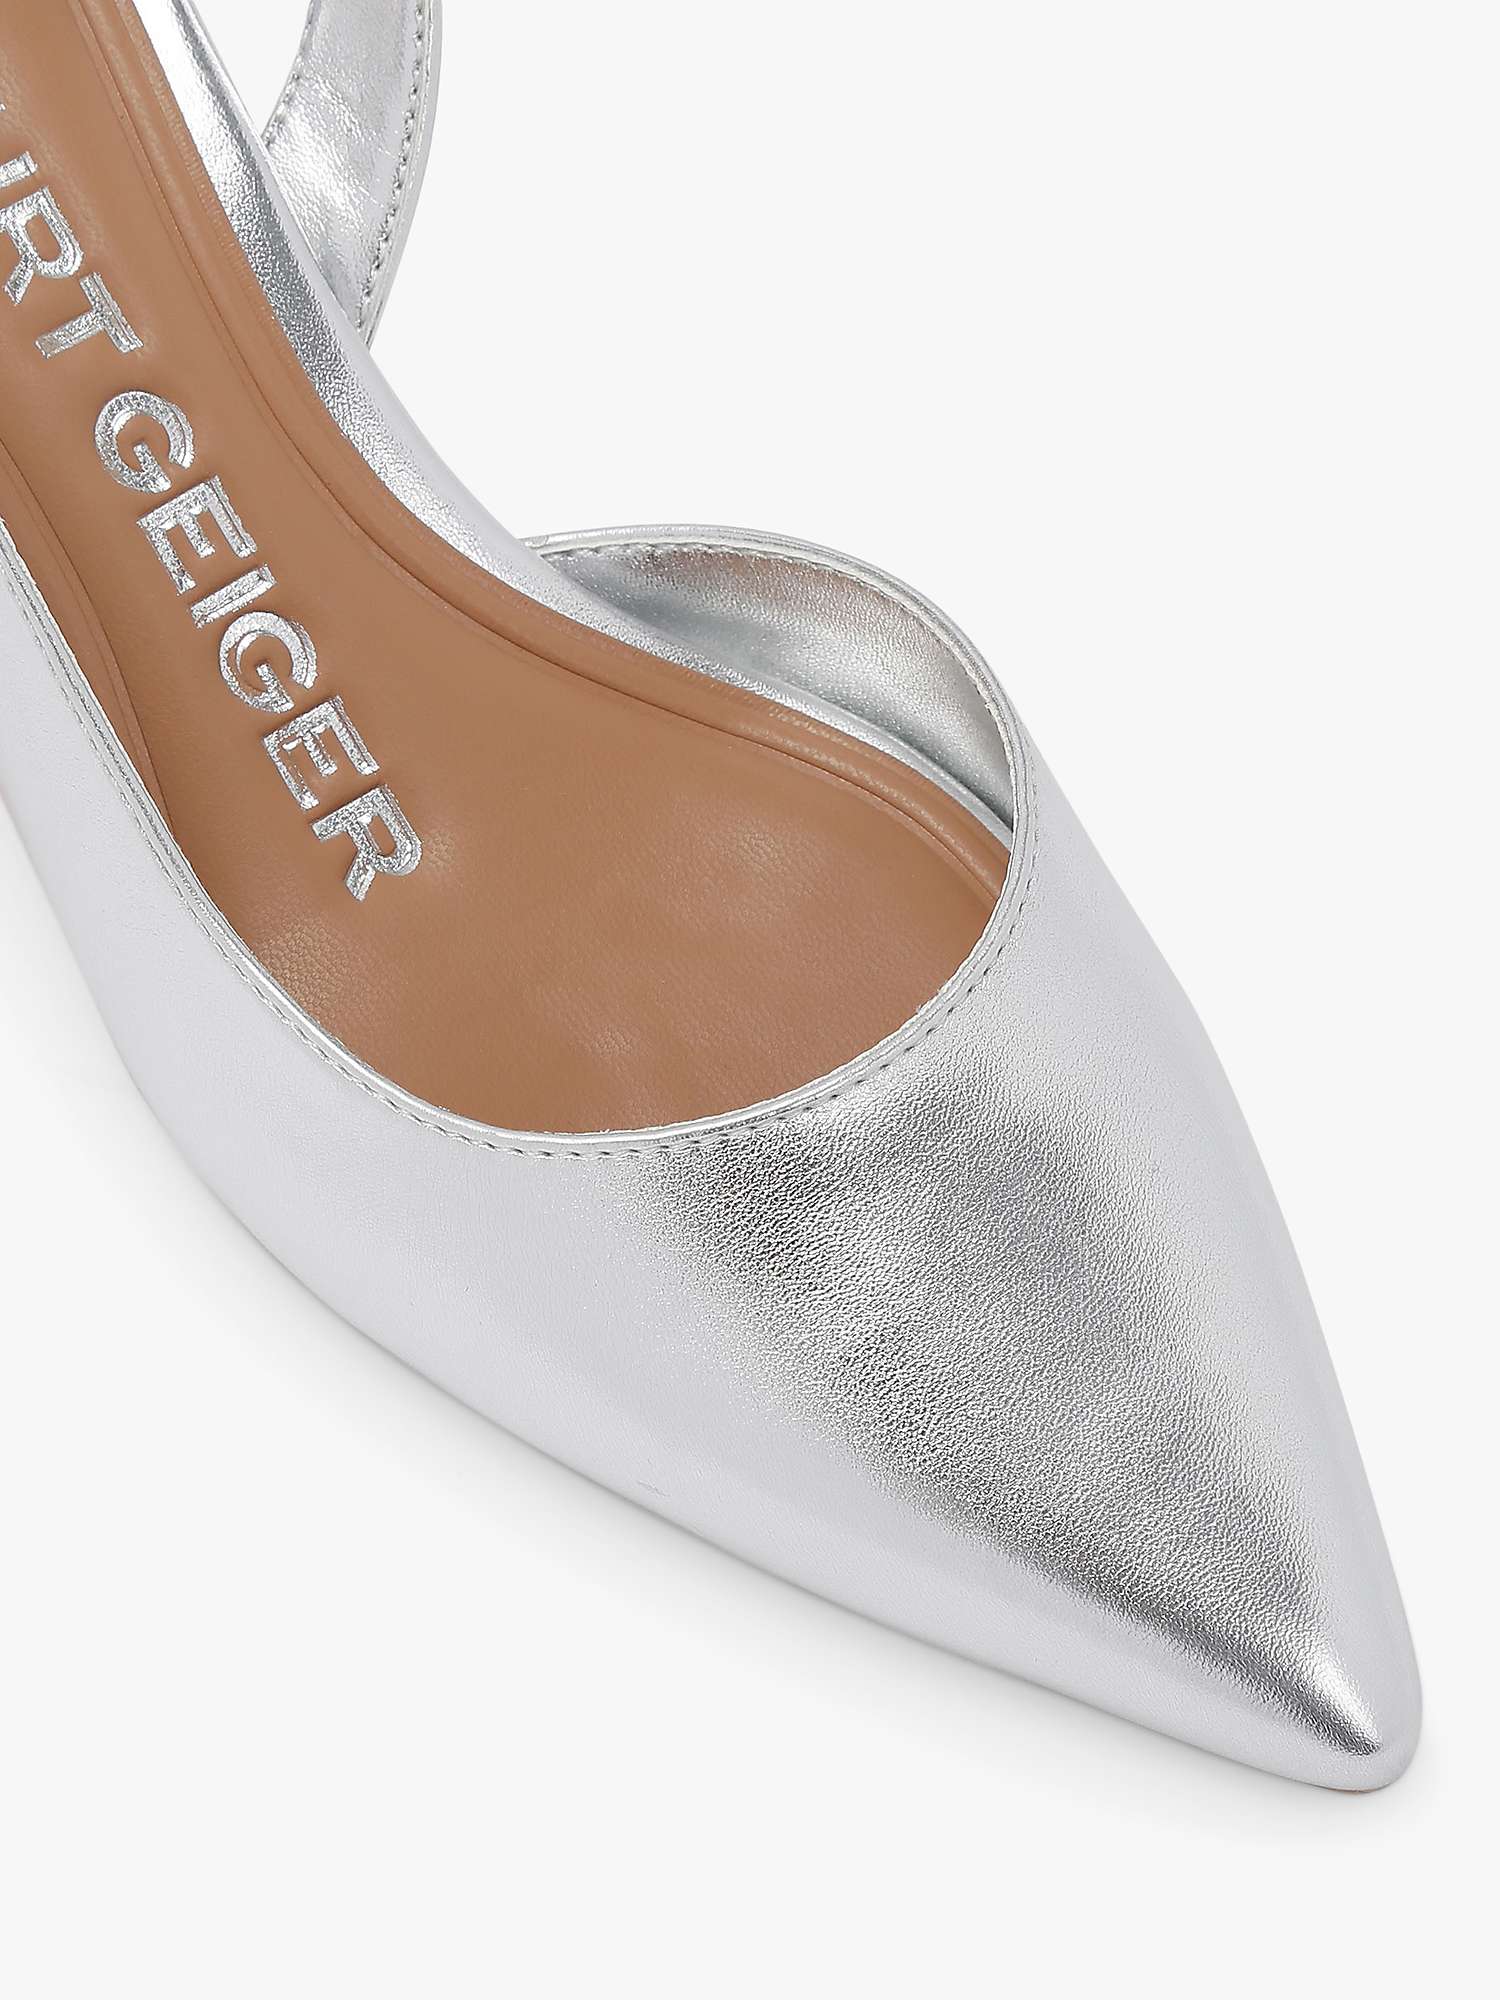 Buy KG Kurt Geiger Aria Slingback Court Shoes Online at johnlewis.com